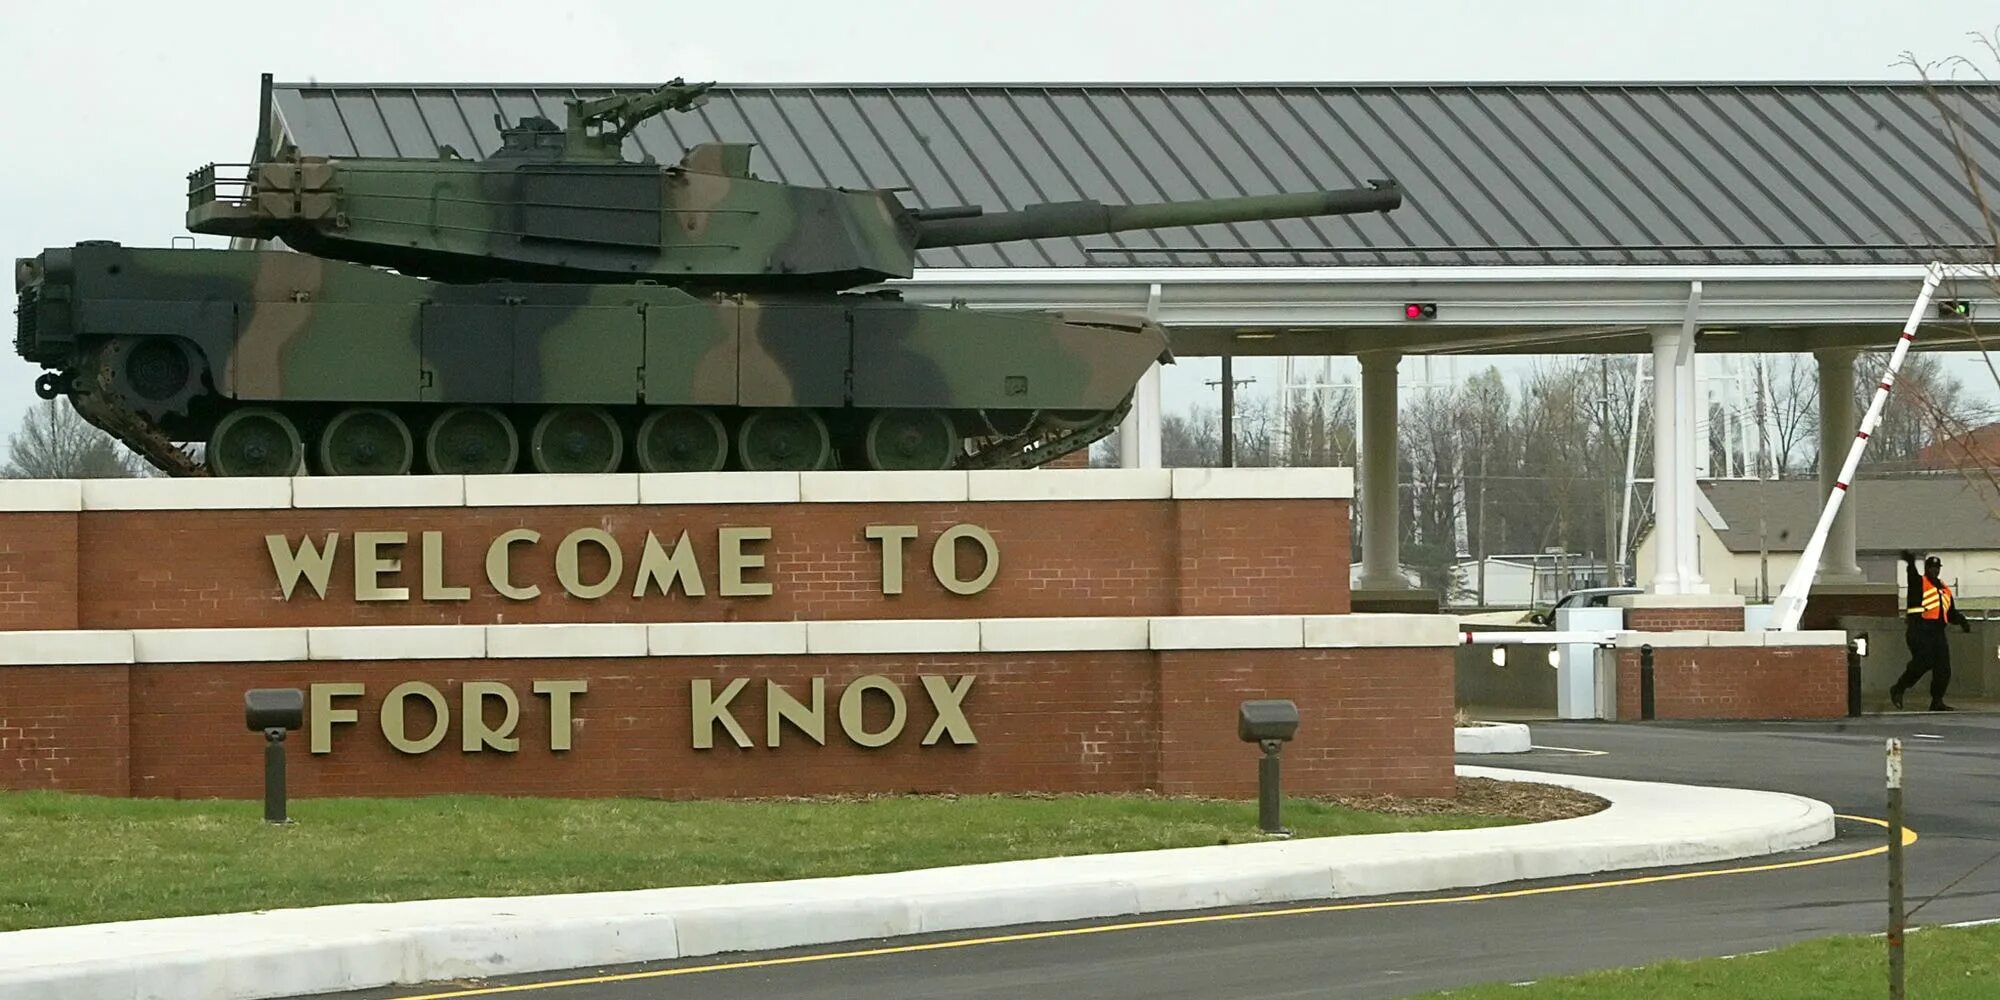 Fort knox. Форт-Нокс в Кентукки. Военной базы Форт-Нокс. Крепость Форт Нокс. Форт Нокс США хранилище золота.